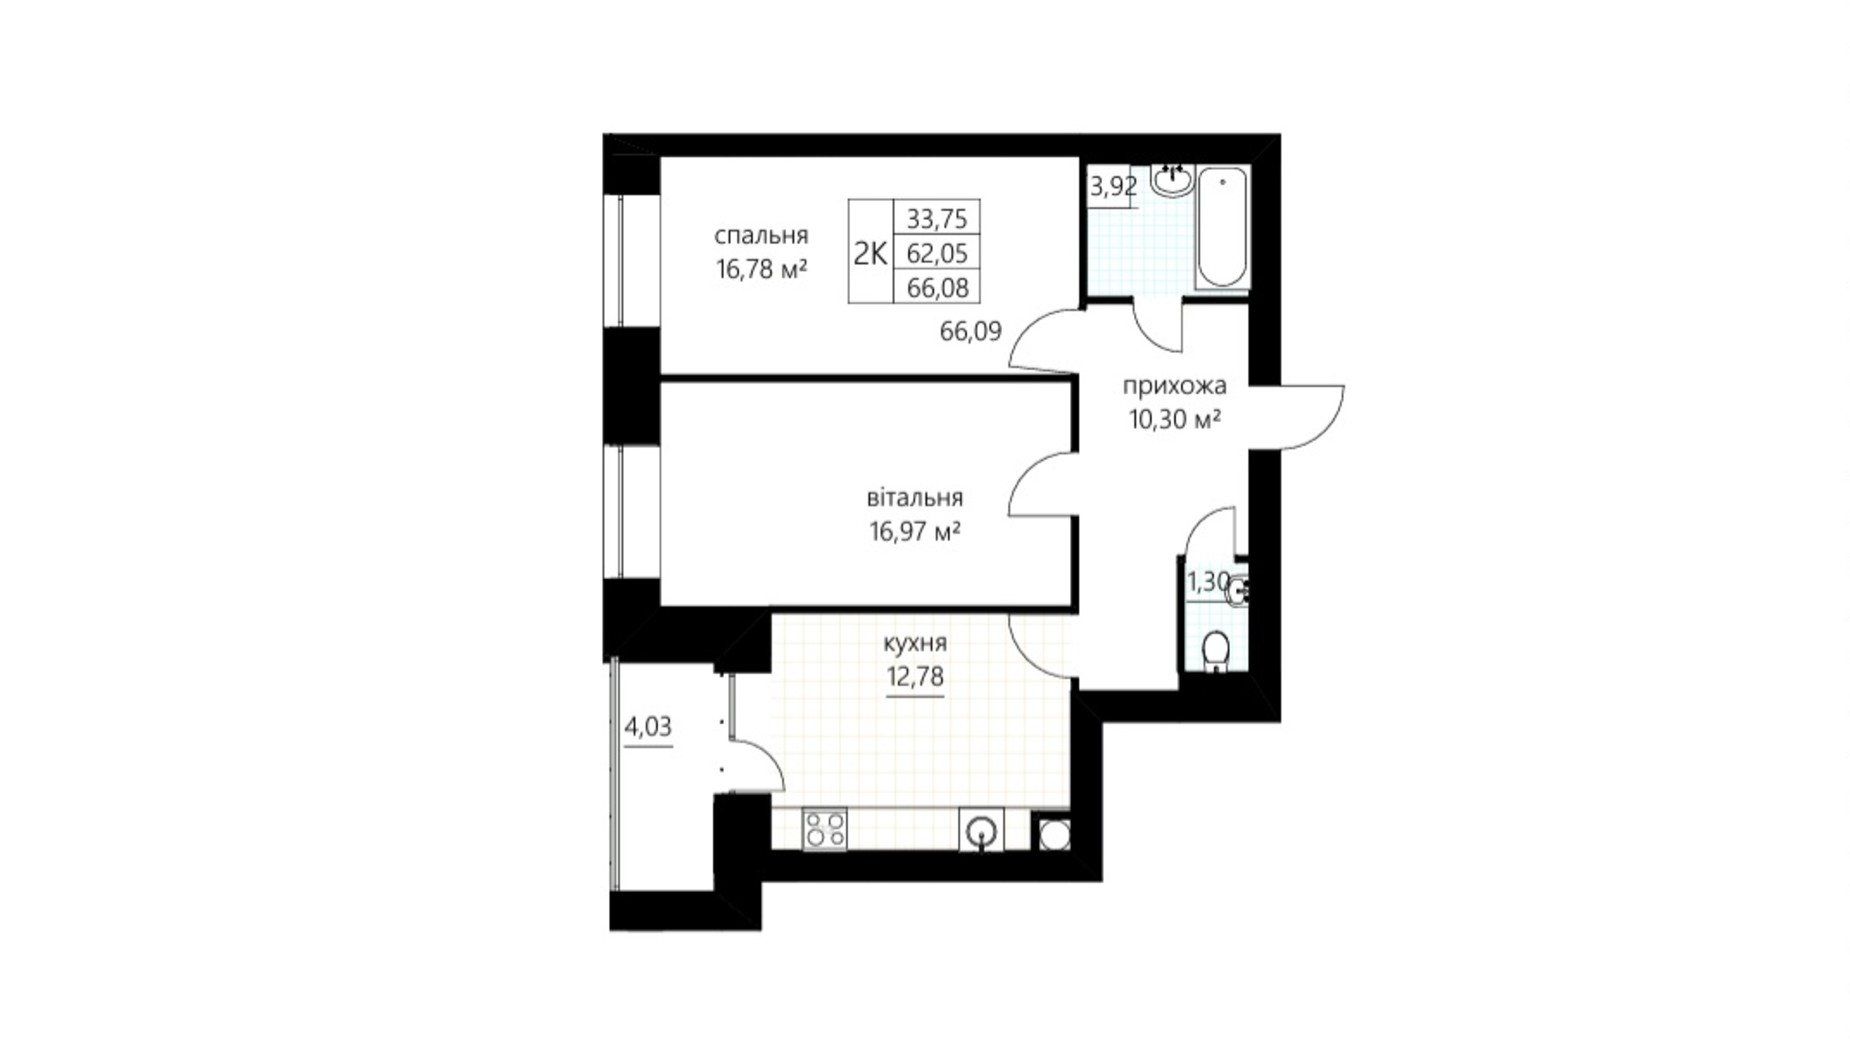 Планування 2-кімнатної квартири в ЖК Слівен-21 66.08 м², фото 674832